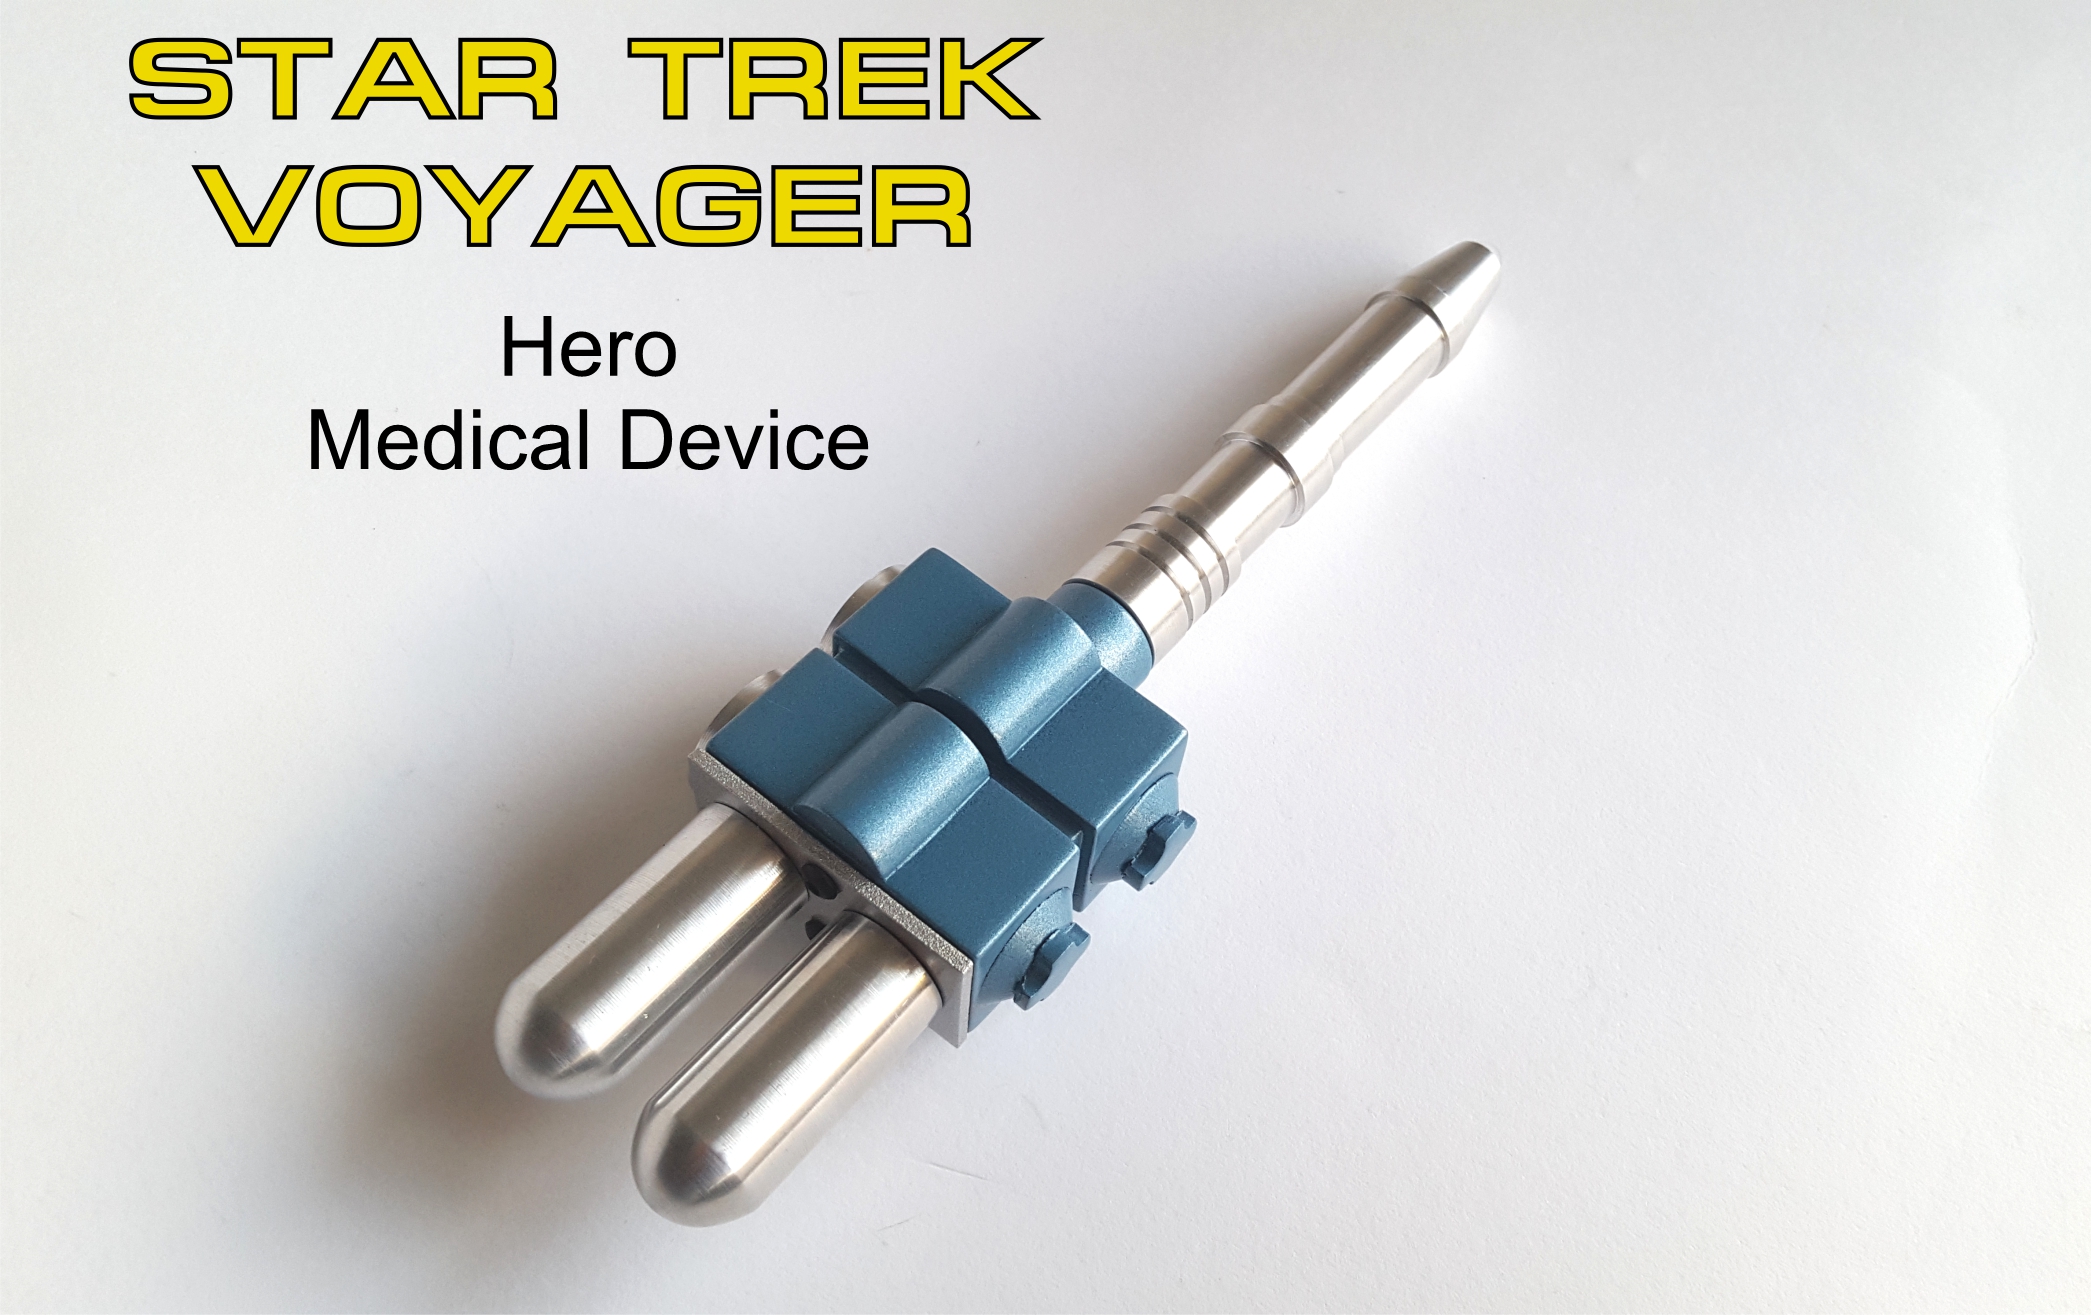 Voyager-Drone-Medical-Tool-3.jpg